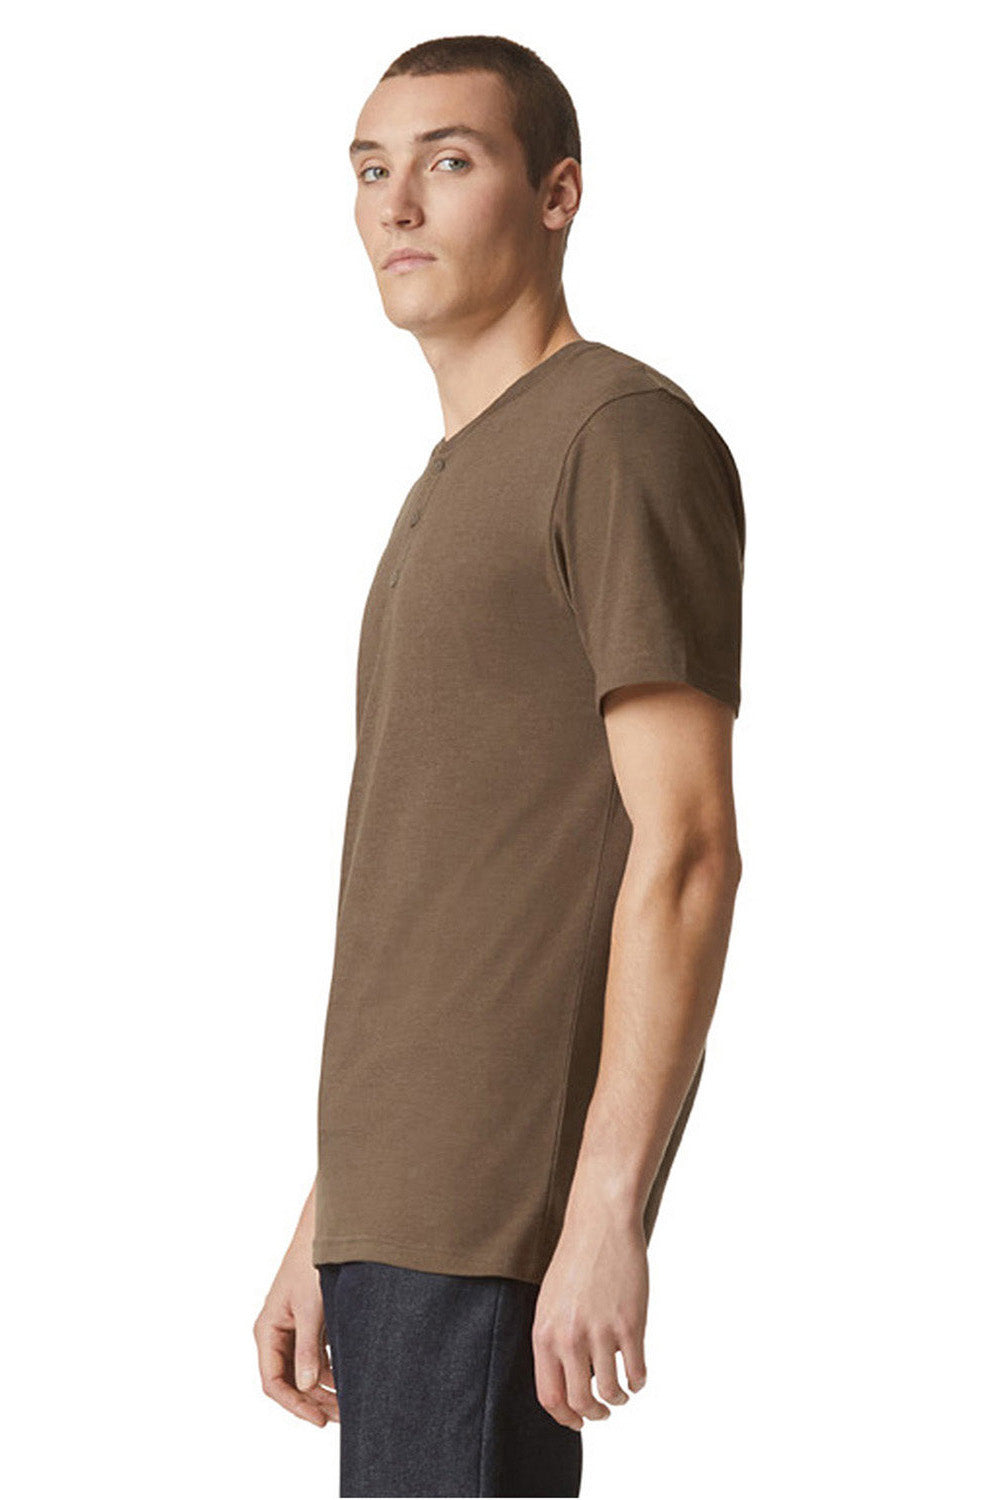 American Apparel 2004CVC Mens CVC Short Sleeve Henley T-Shirt Heather Army Brown Model Side